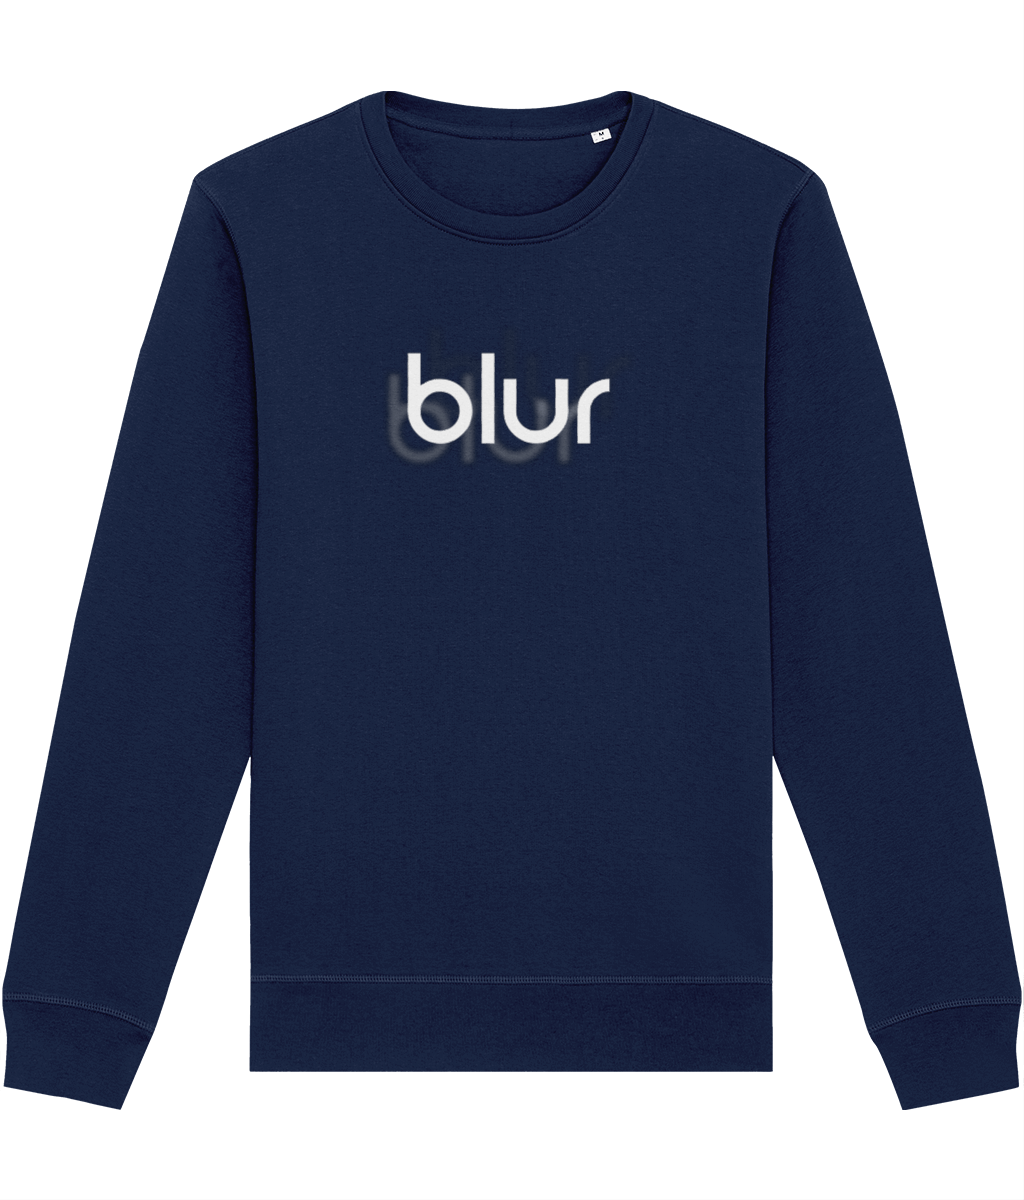 Contemporary 'Blur' Organic Cotton Sweatshirt - Eco Sweatshirt